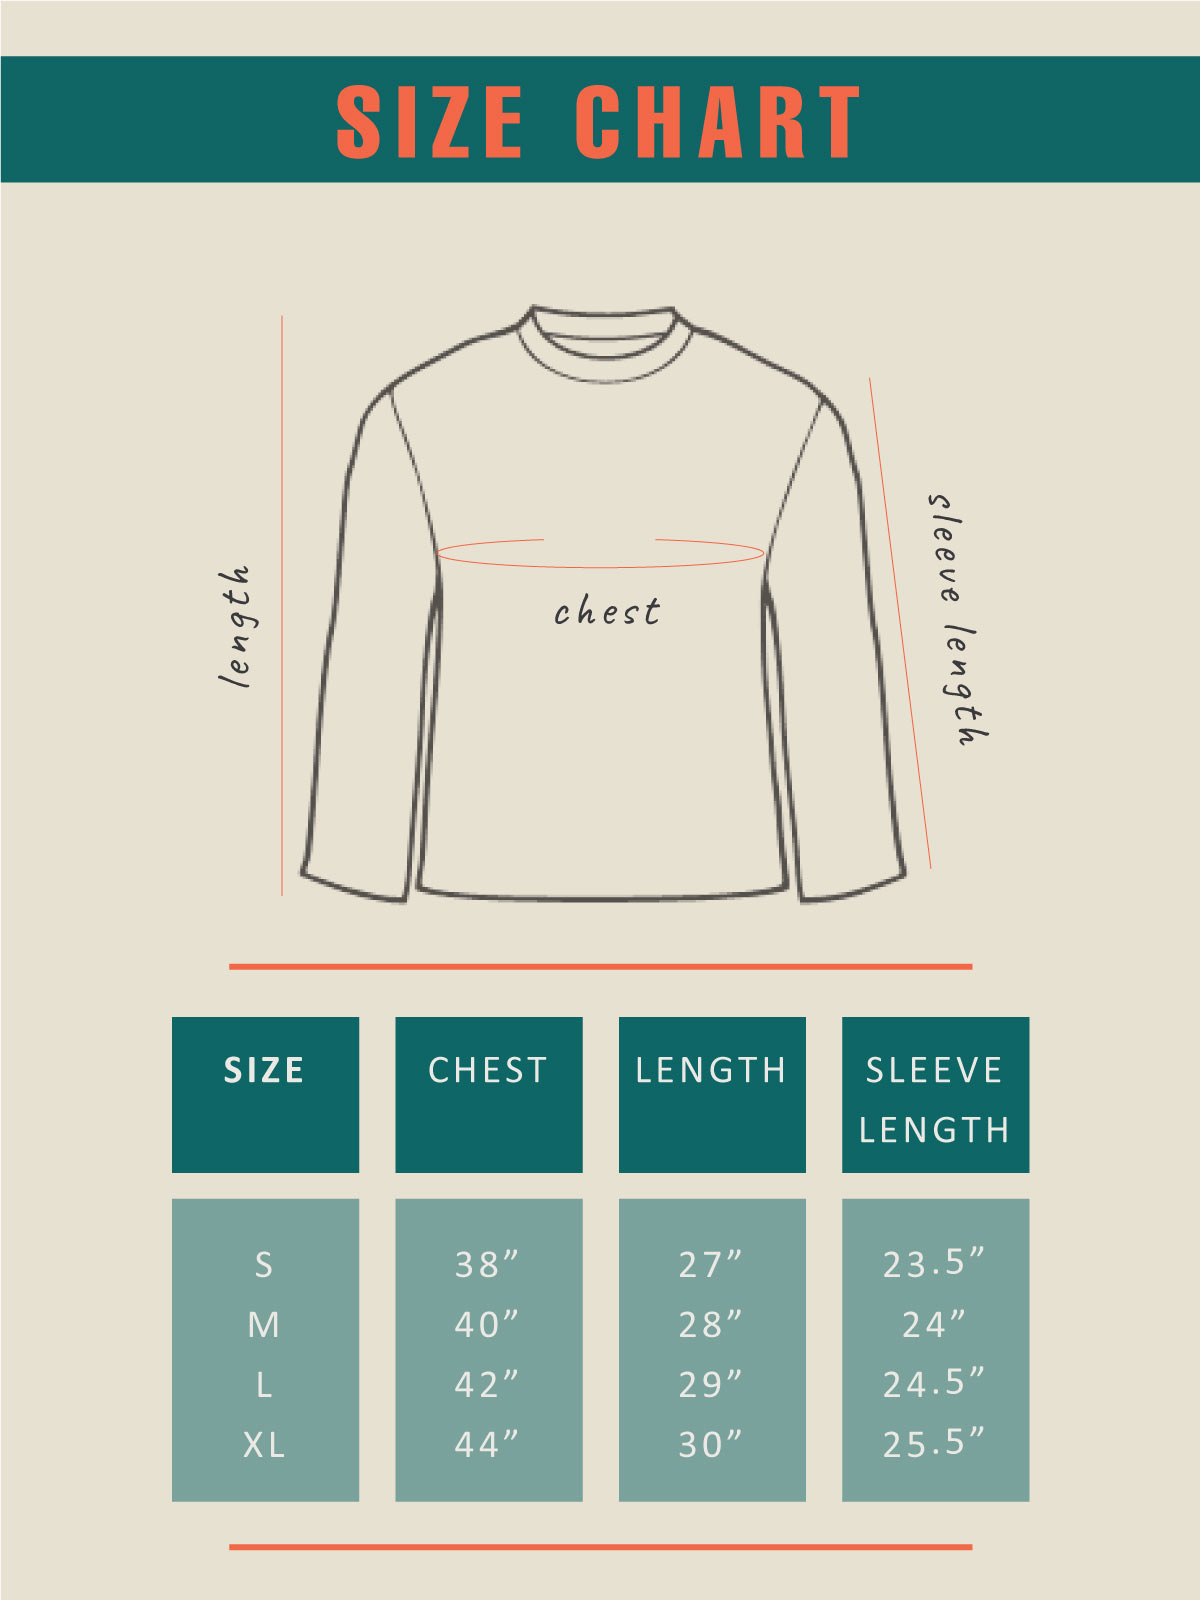 Unisex tshirt size chart by shopghumakkad